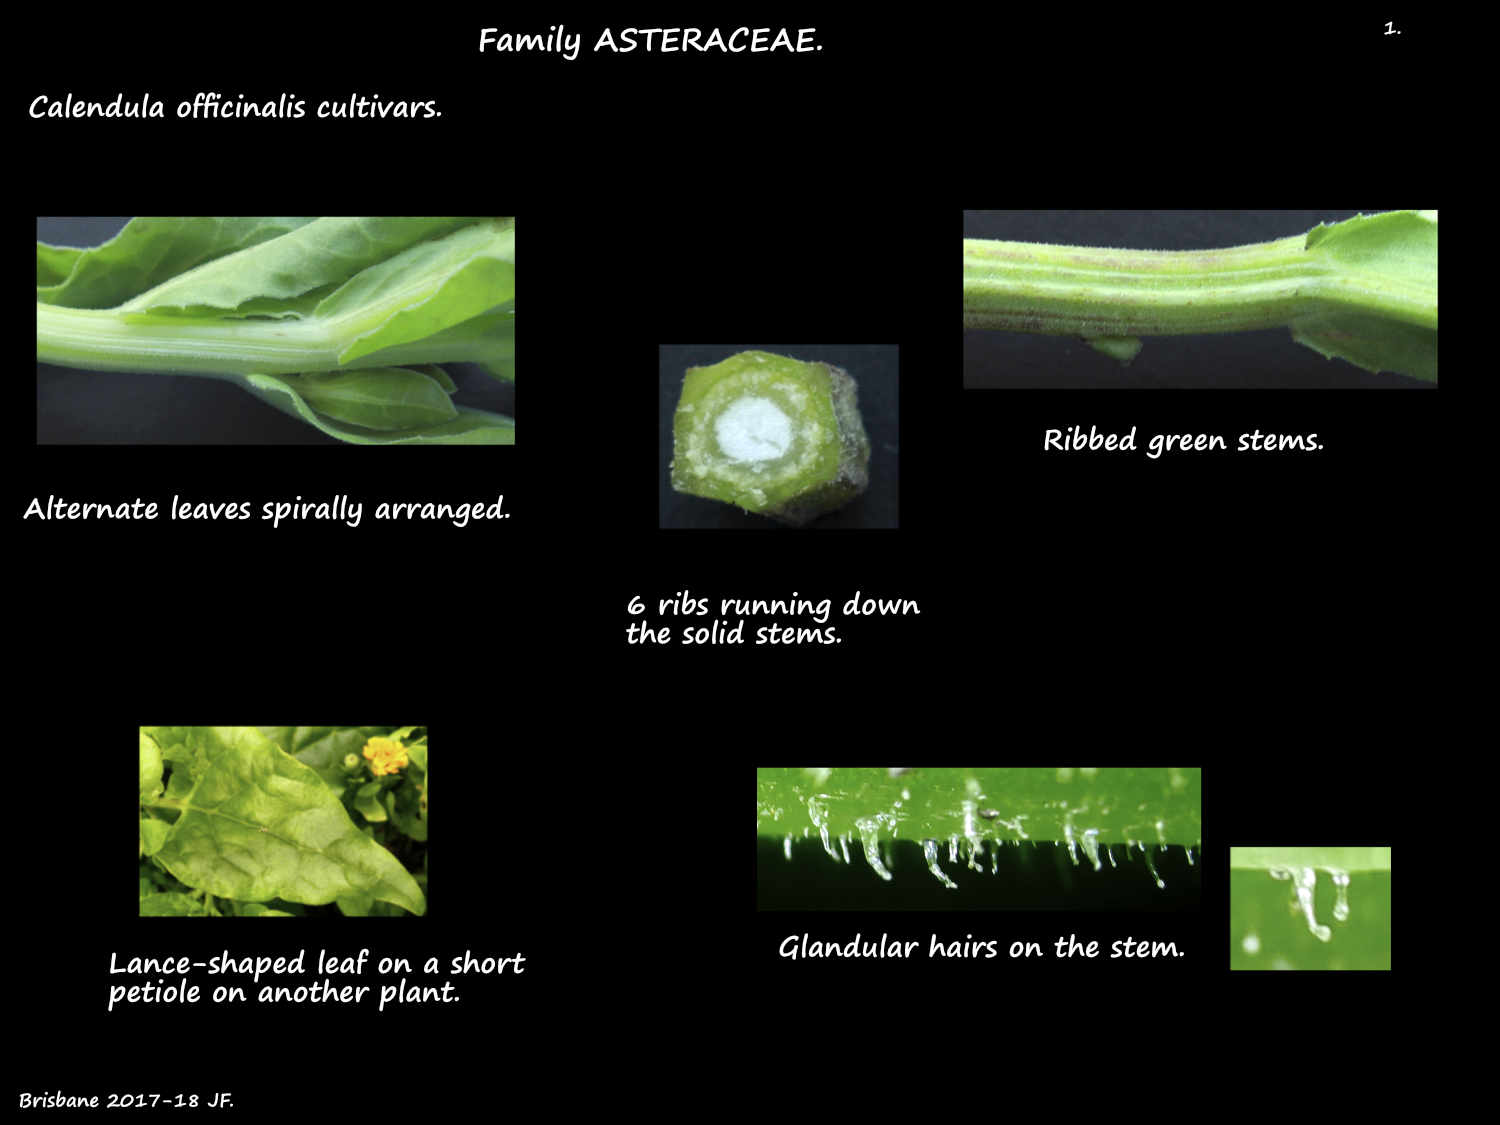 1 Calendula officinalis hairy stems